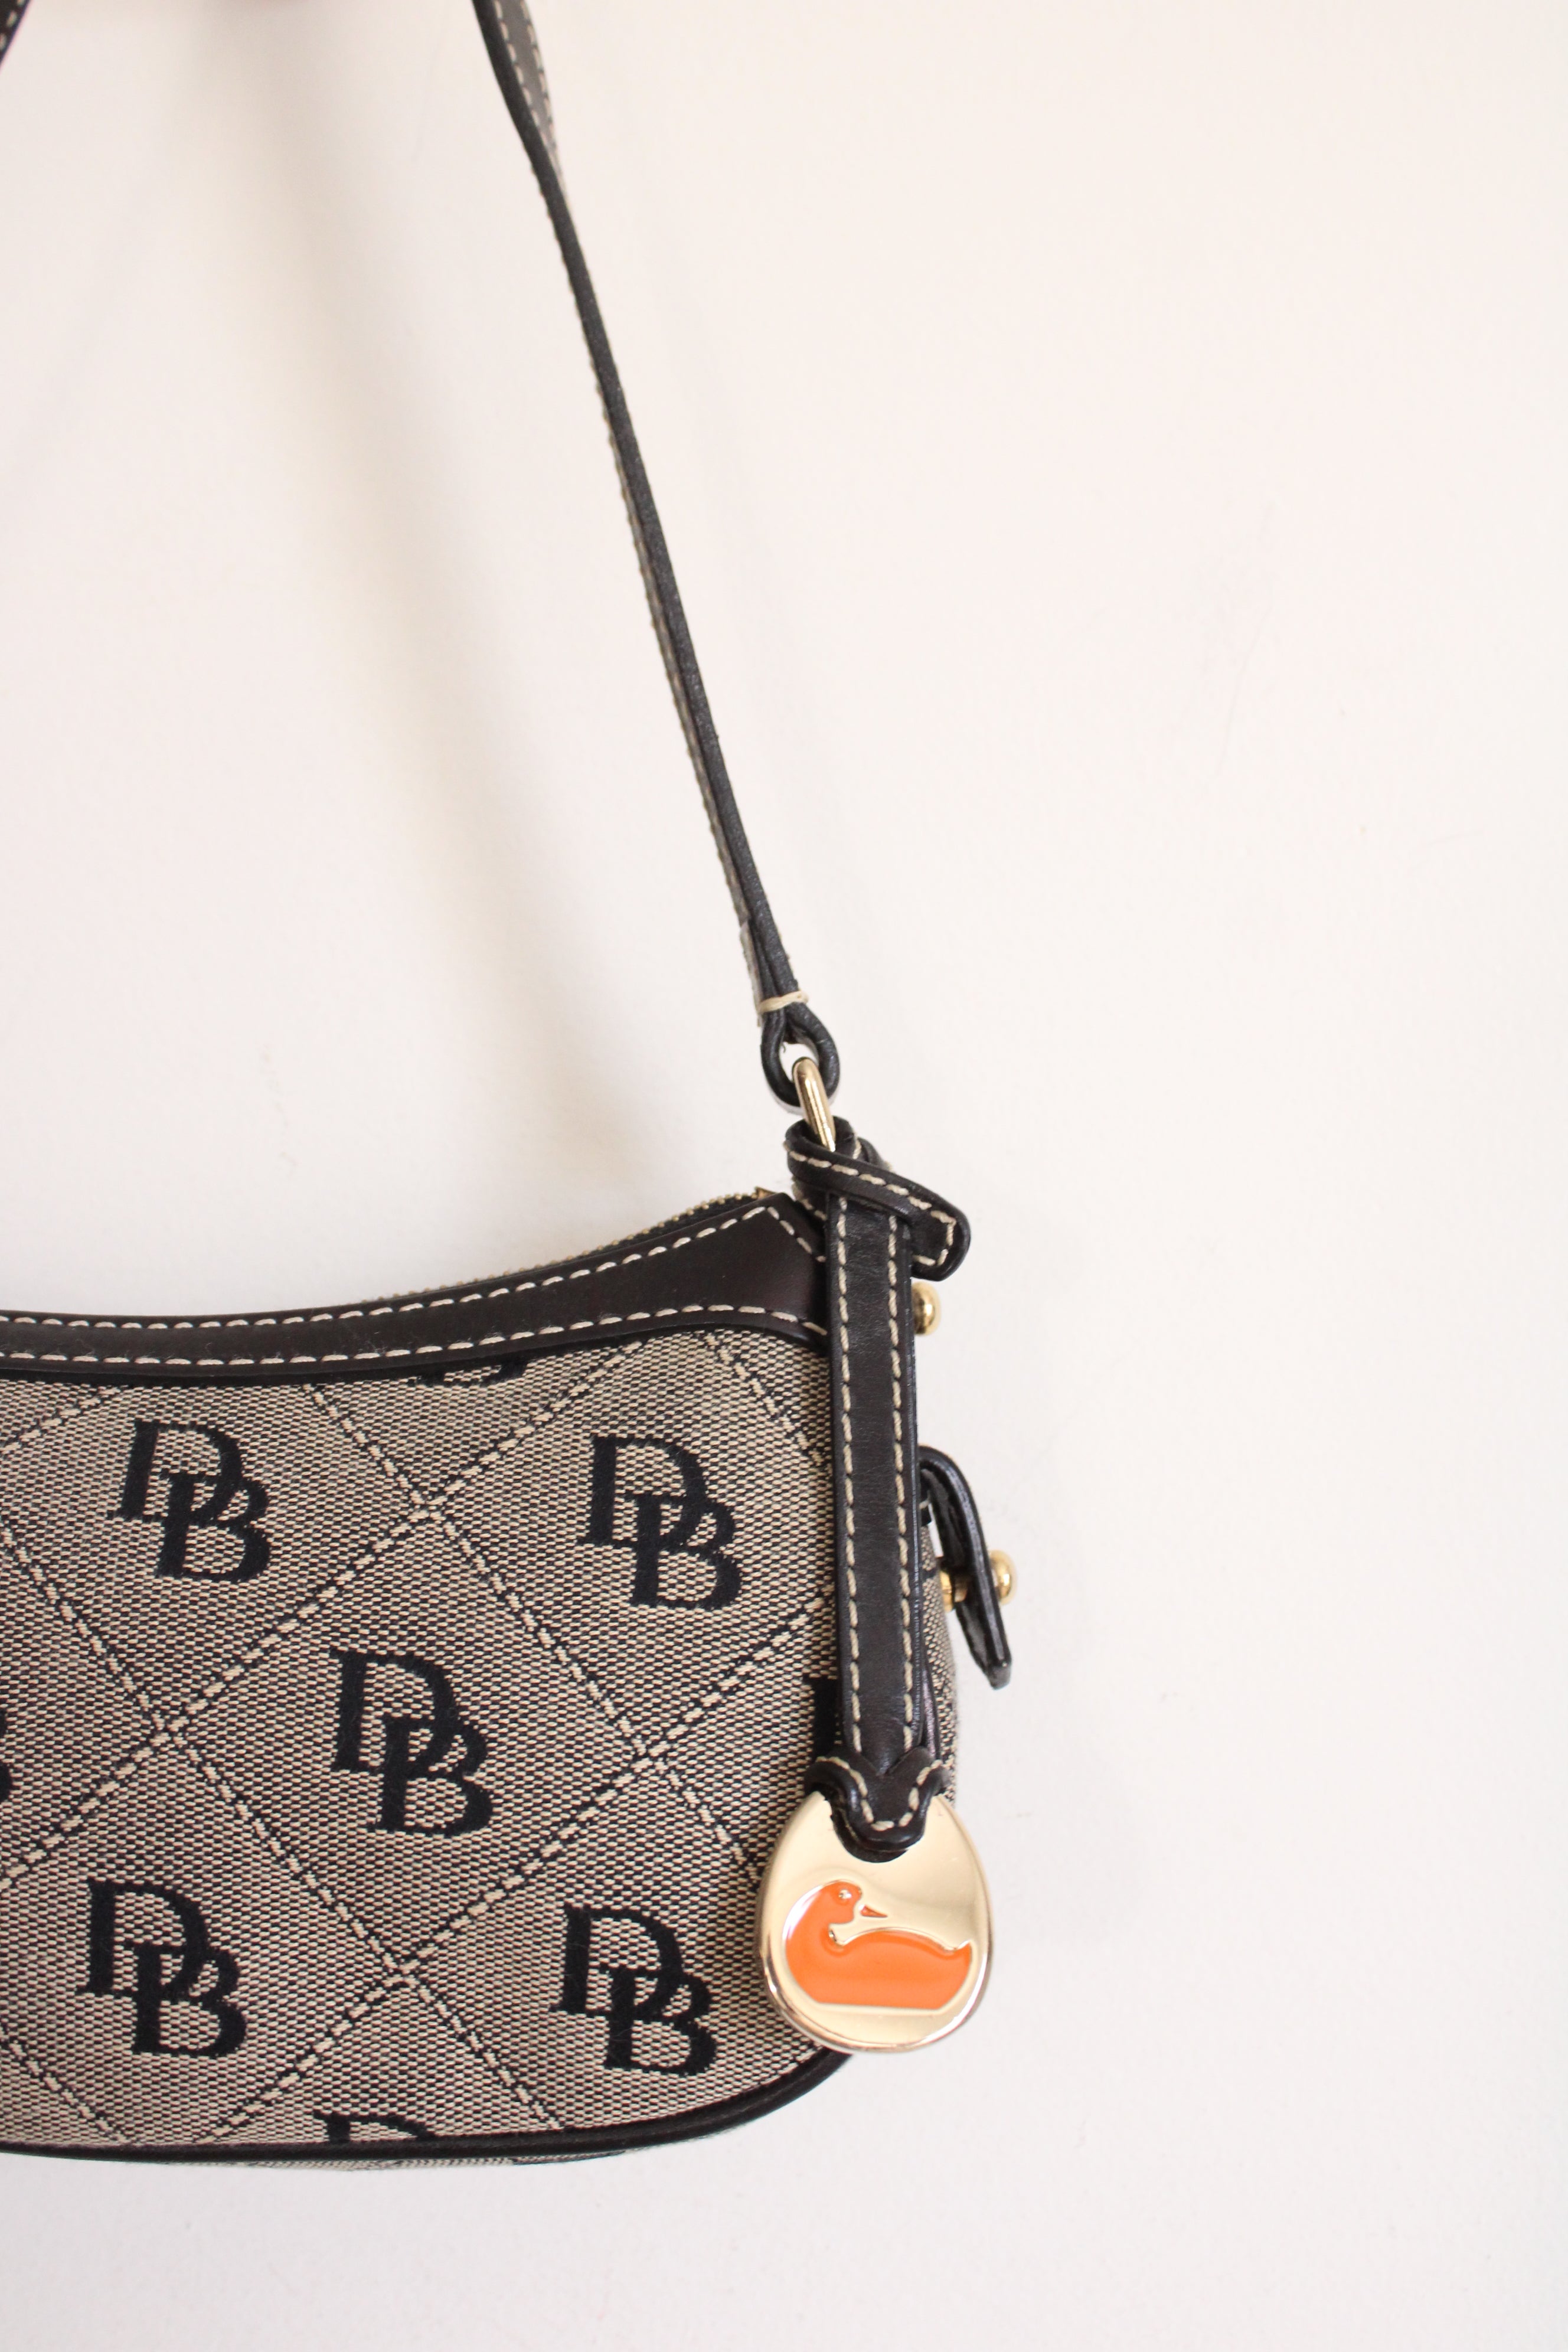 Dooney & Bourke Tan Black Signature Mini Shoulder Bag